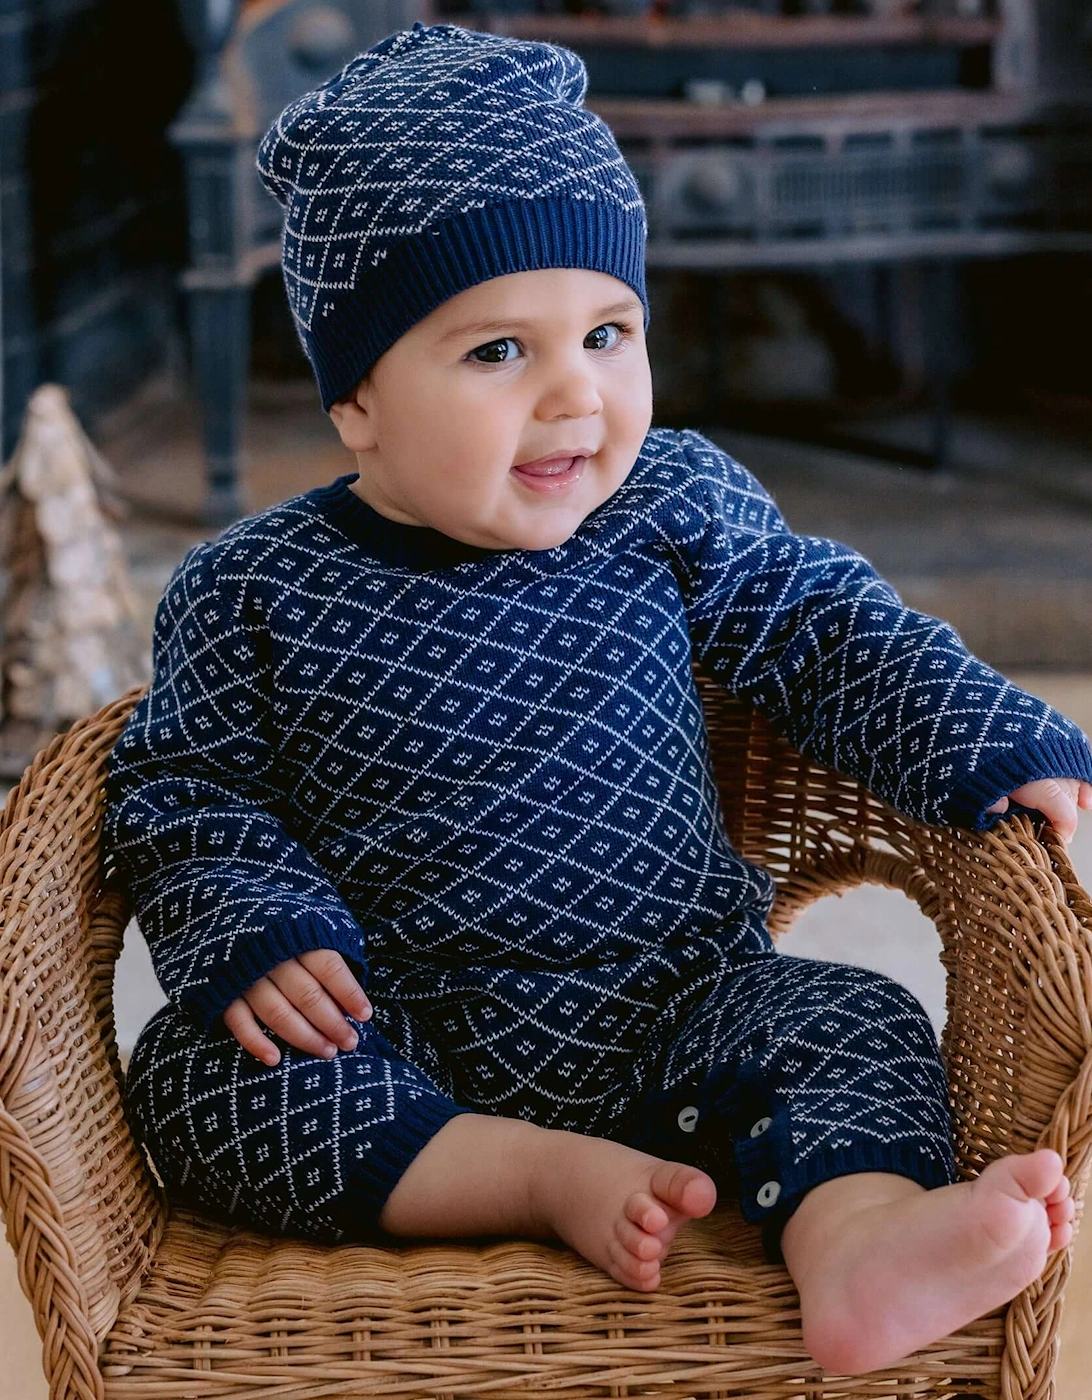 Baby Boys Navy Everett Knitted Babygrow Set